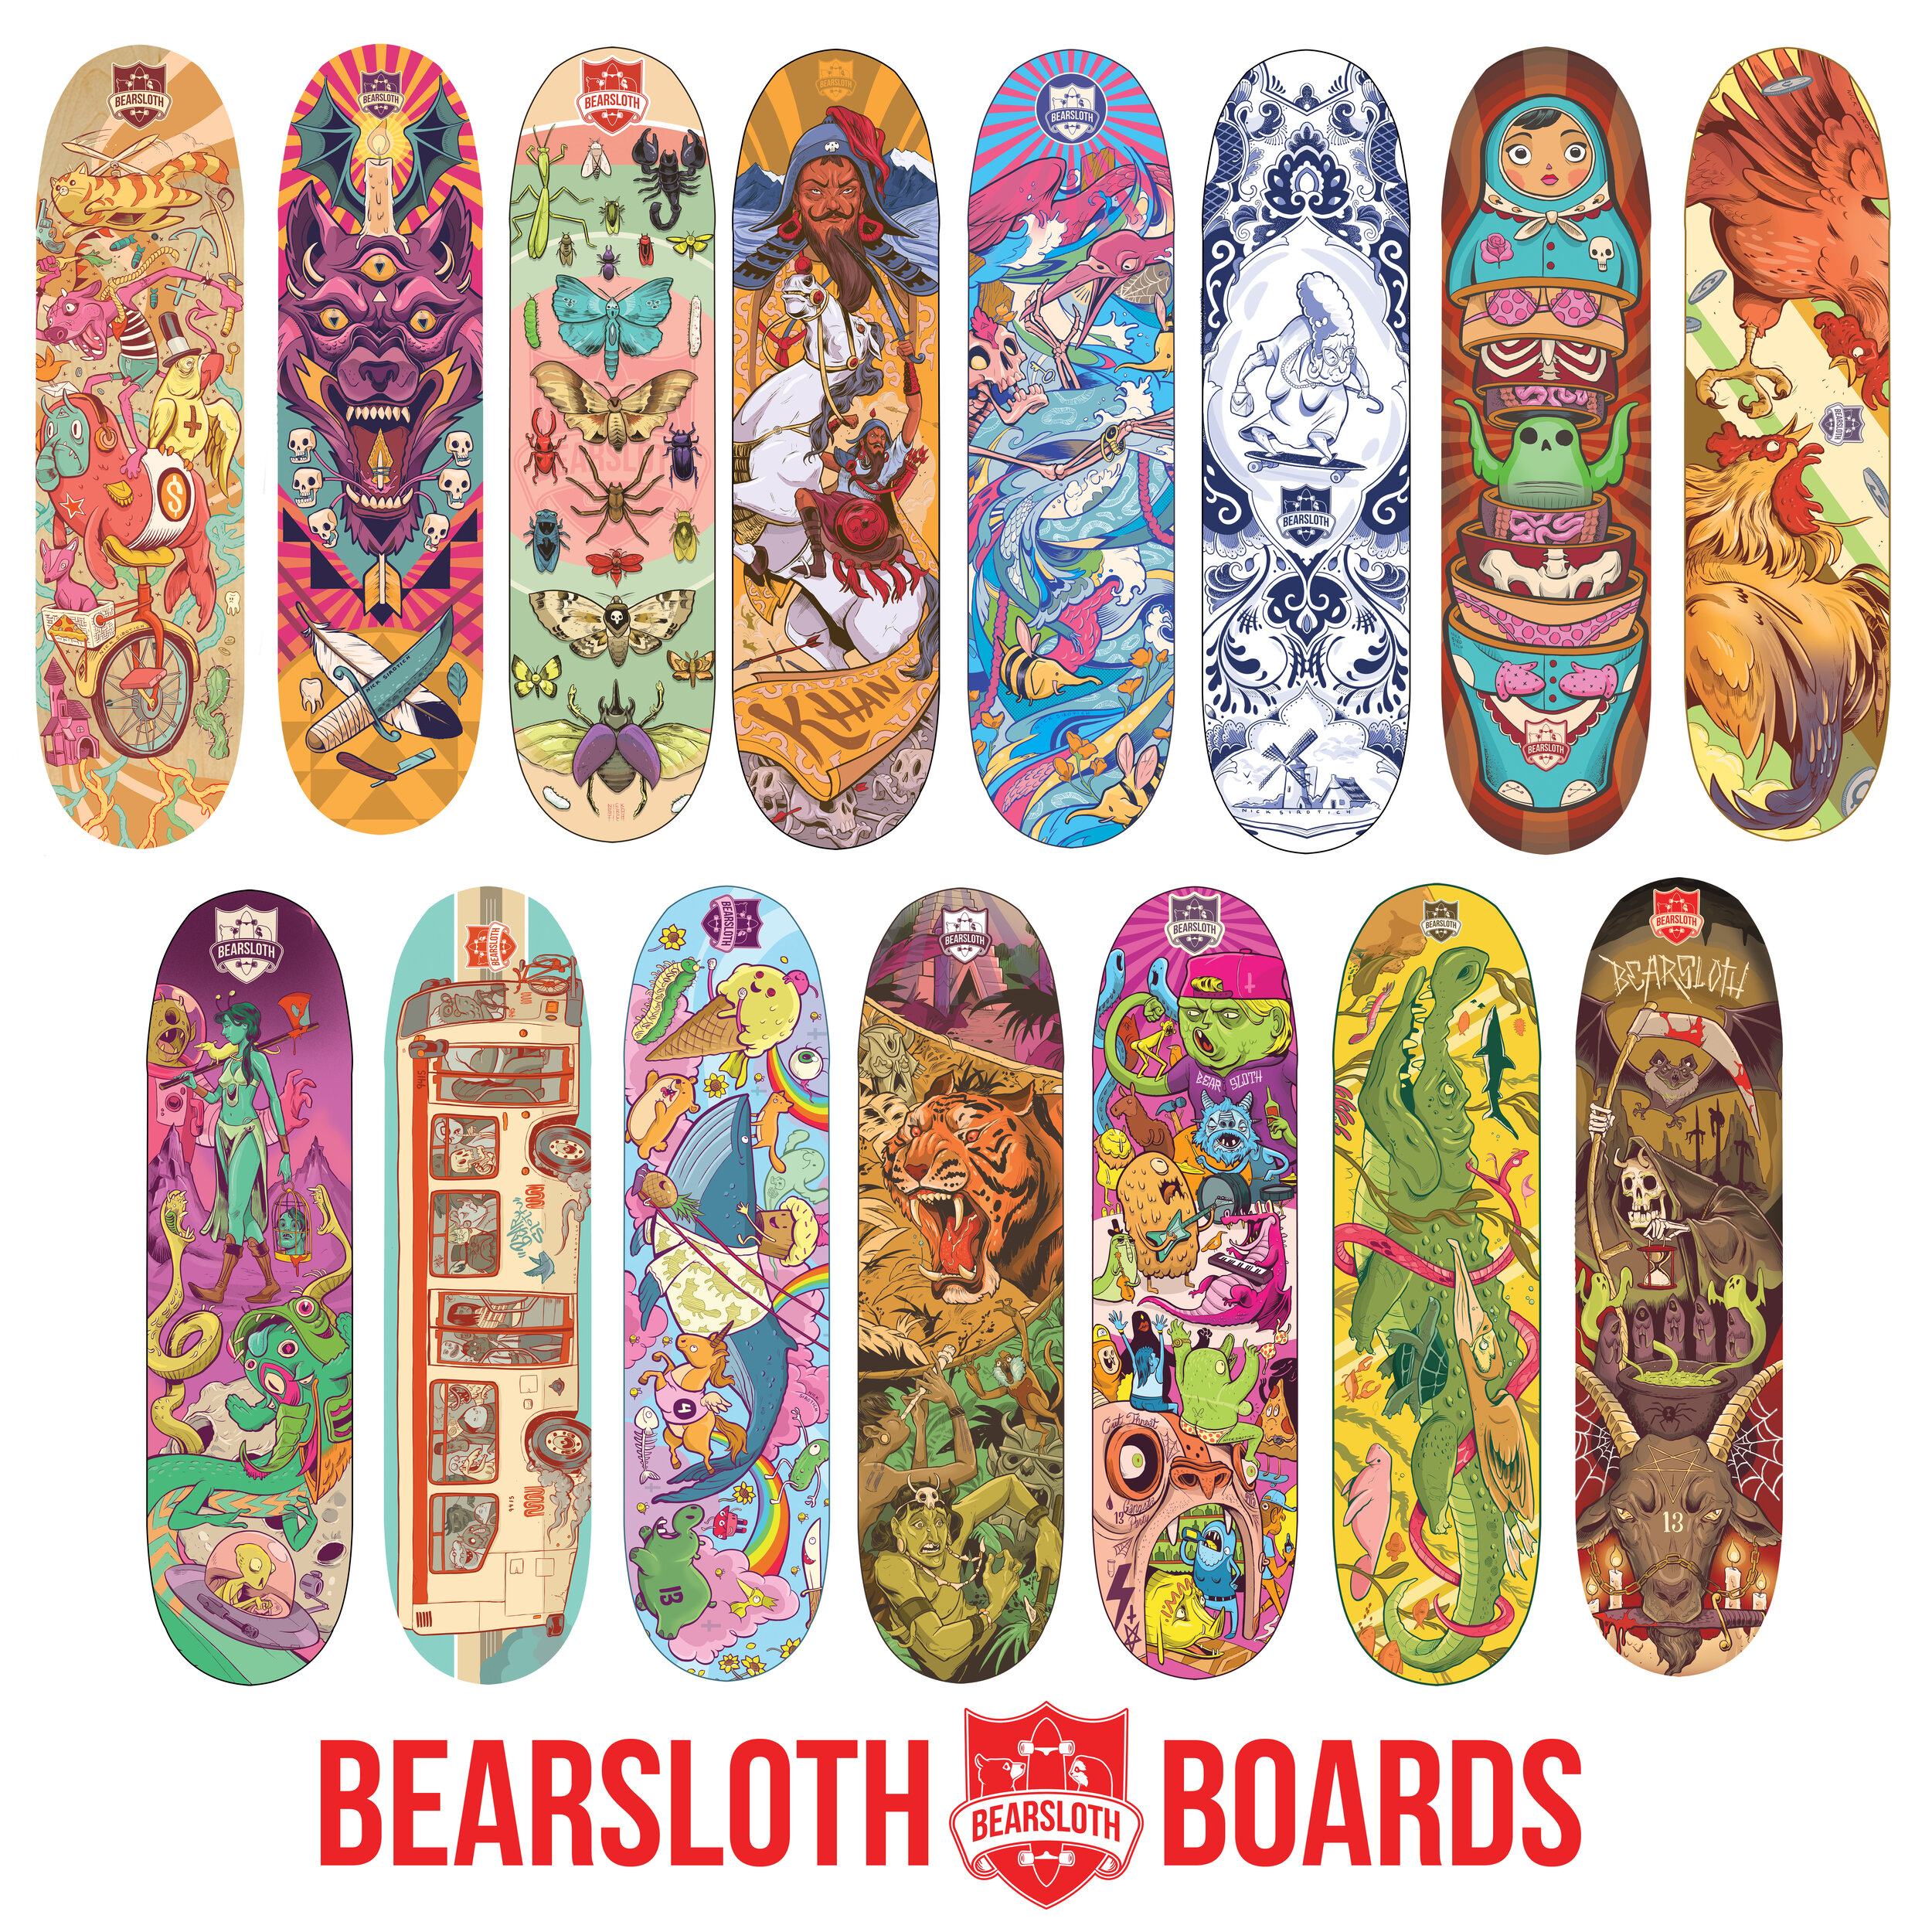 All Bearsloth BoardsX .jpg